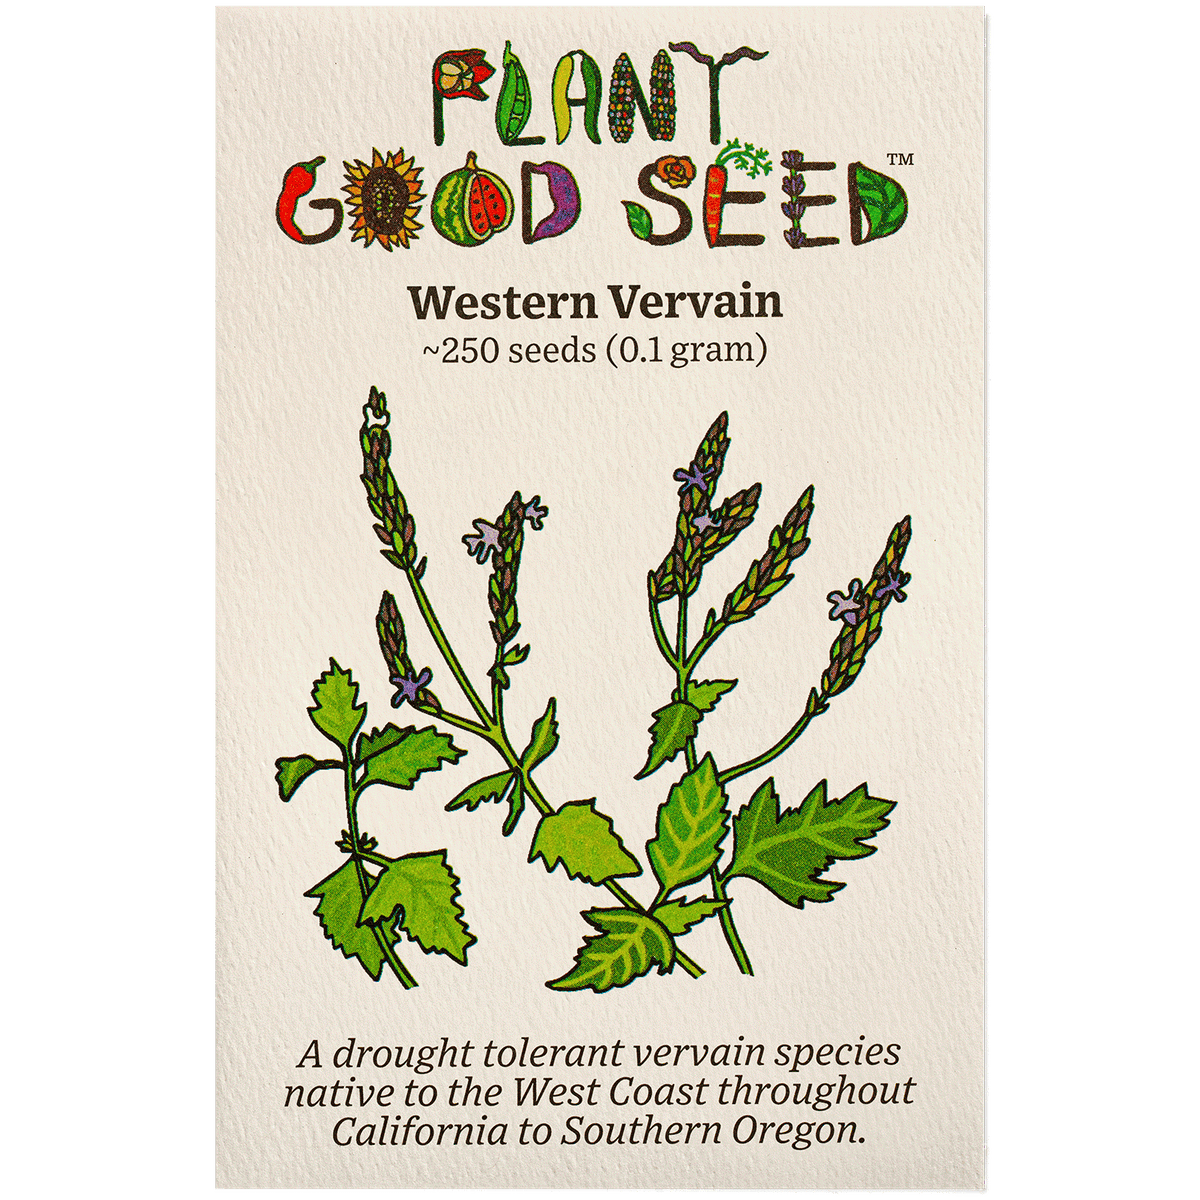 Western Vervain (Verbena lasiostachys) seed packet